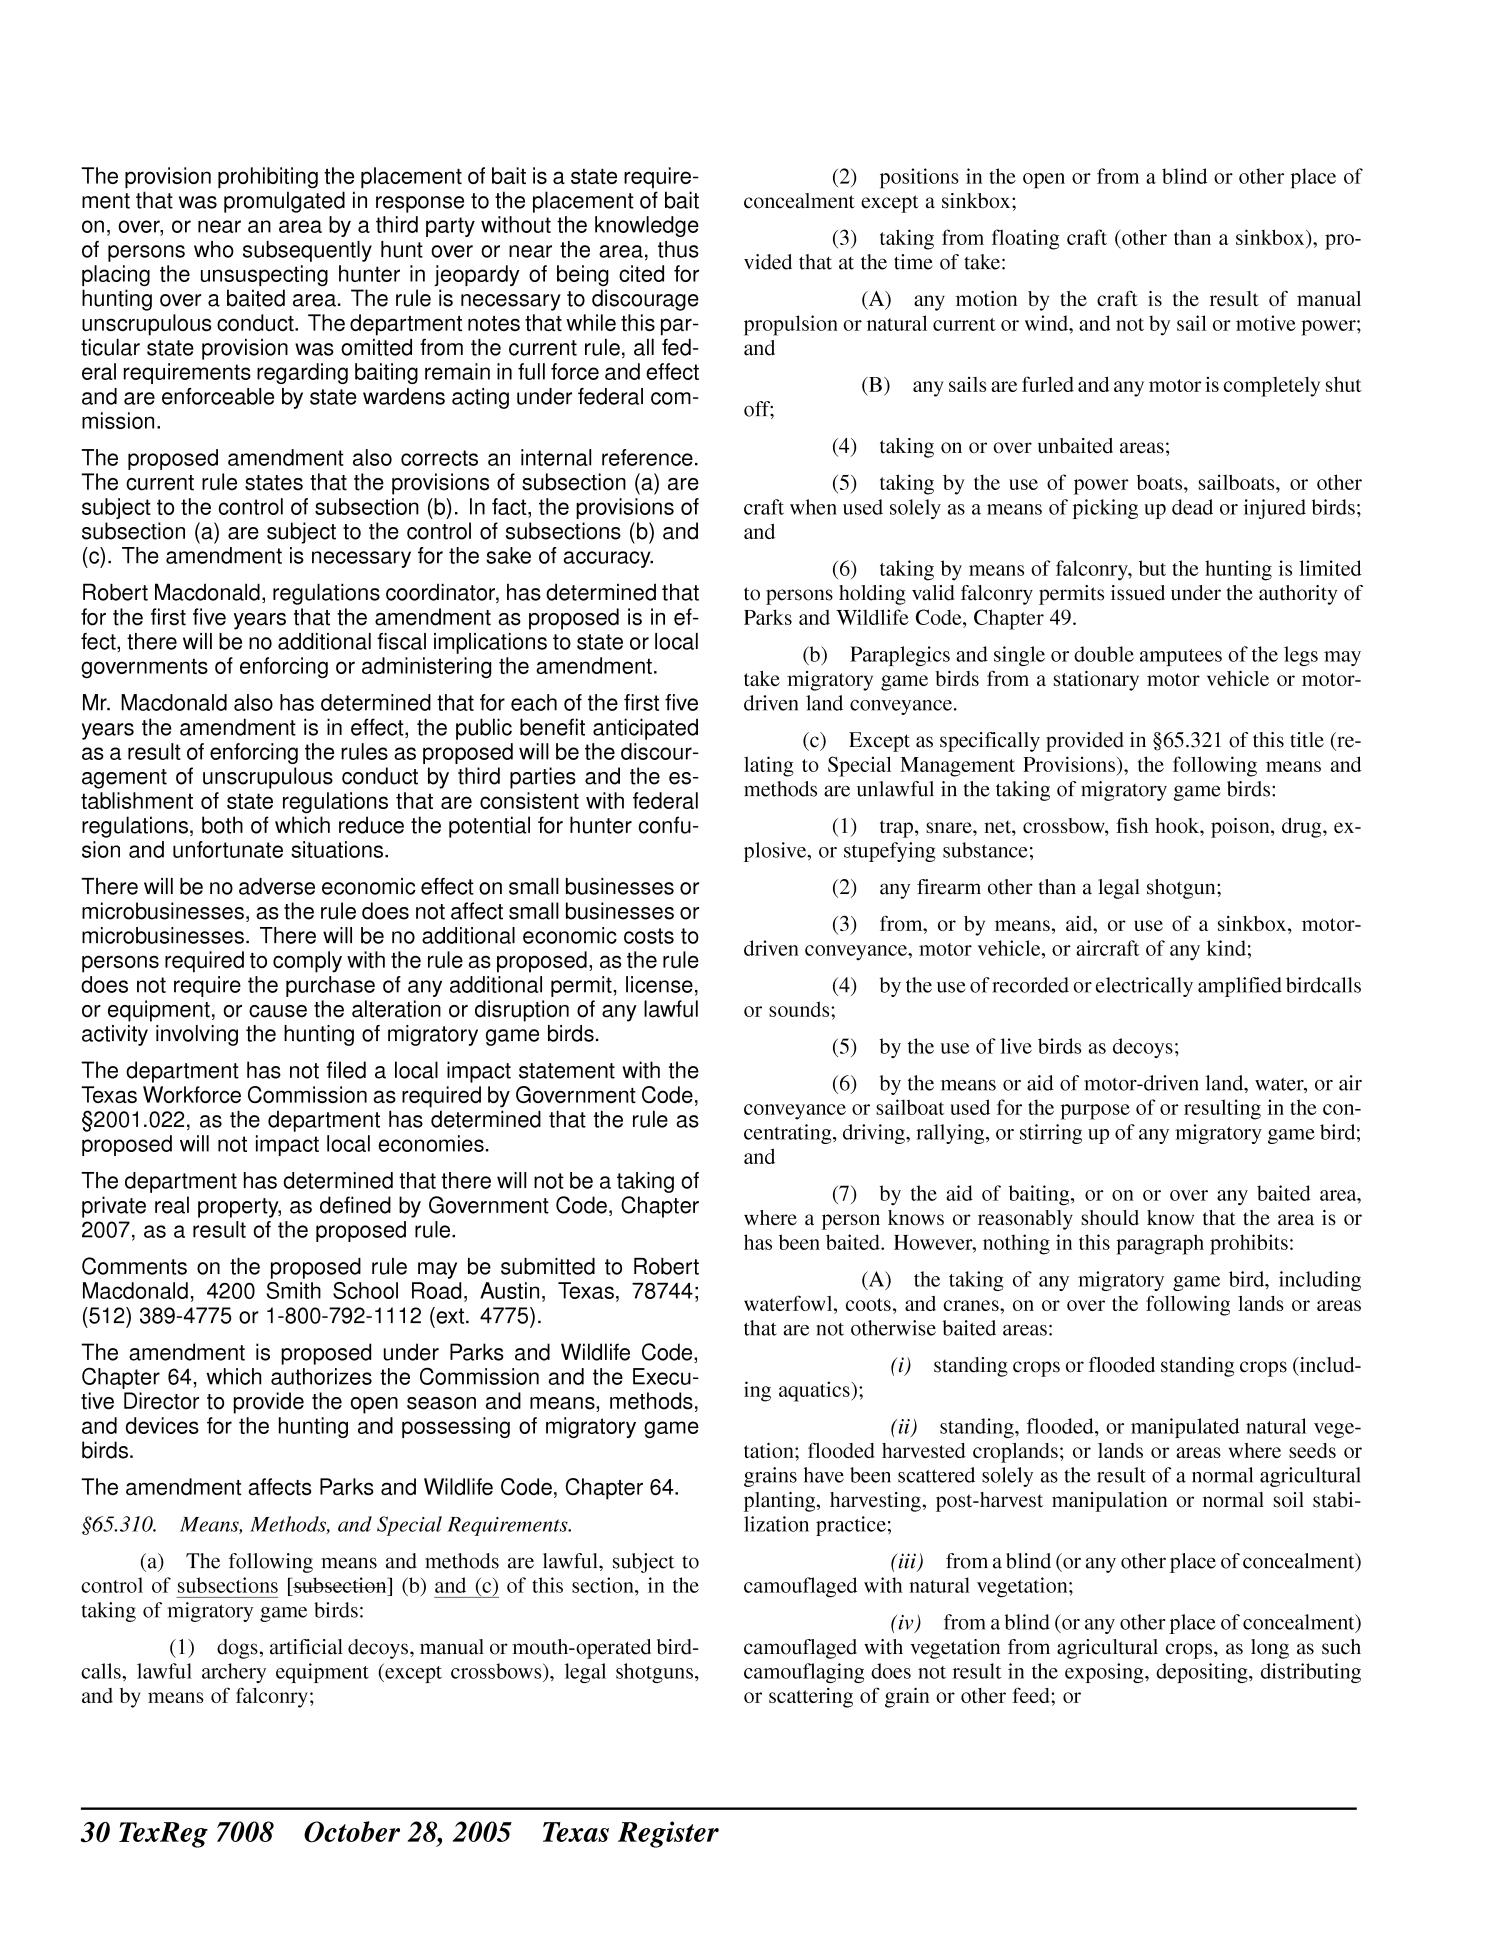 Texas Register, Volume 30, Number 43, Pages 6973-7094, October 28, 2005
                                                
                                                    7008
                                                